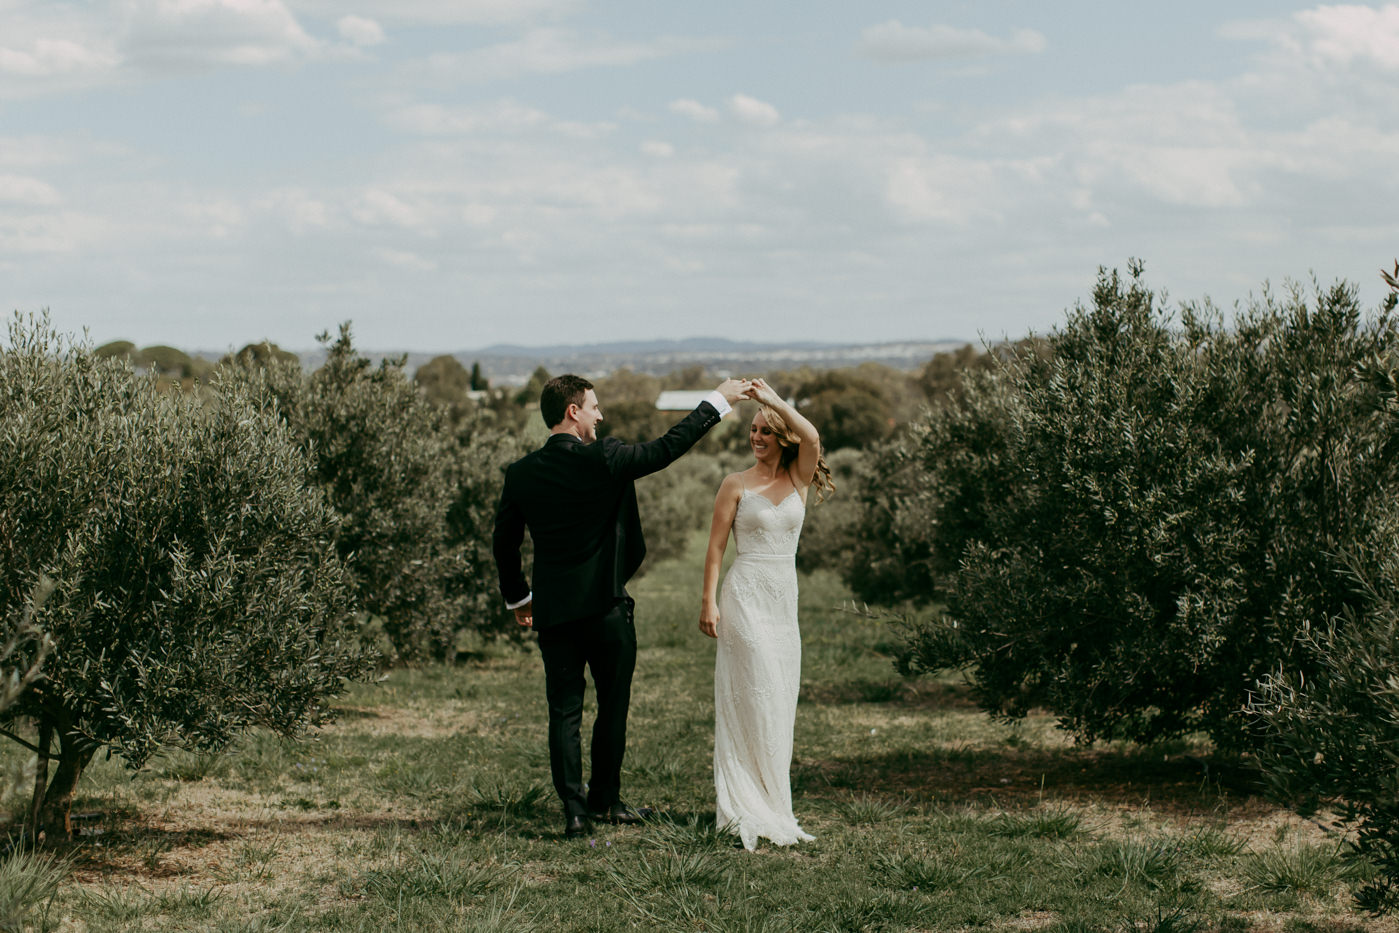 Anthony & Eliet - Wagga Wagga Wedding - Country NSW - Samantha Heather Photography-73.jpg